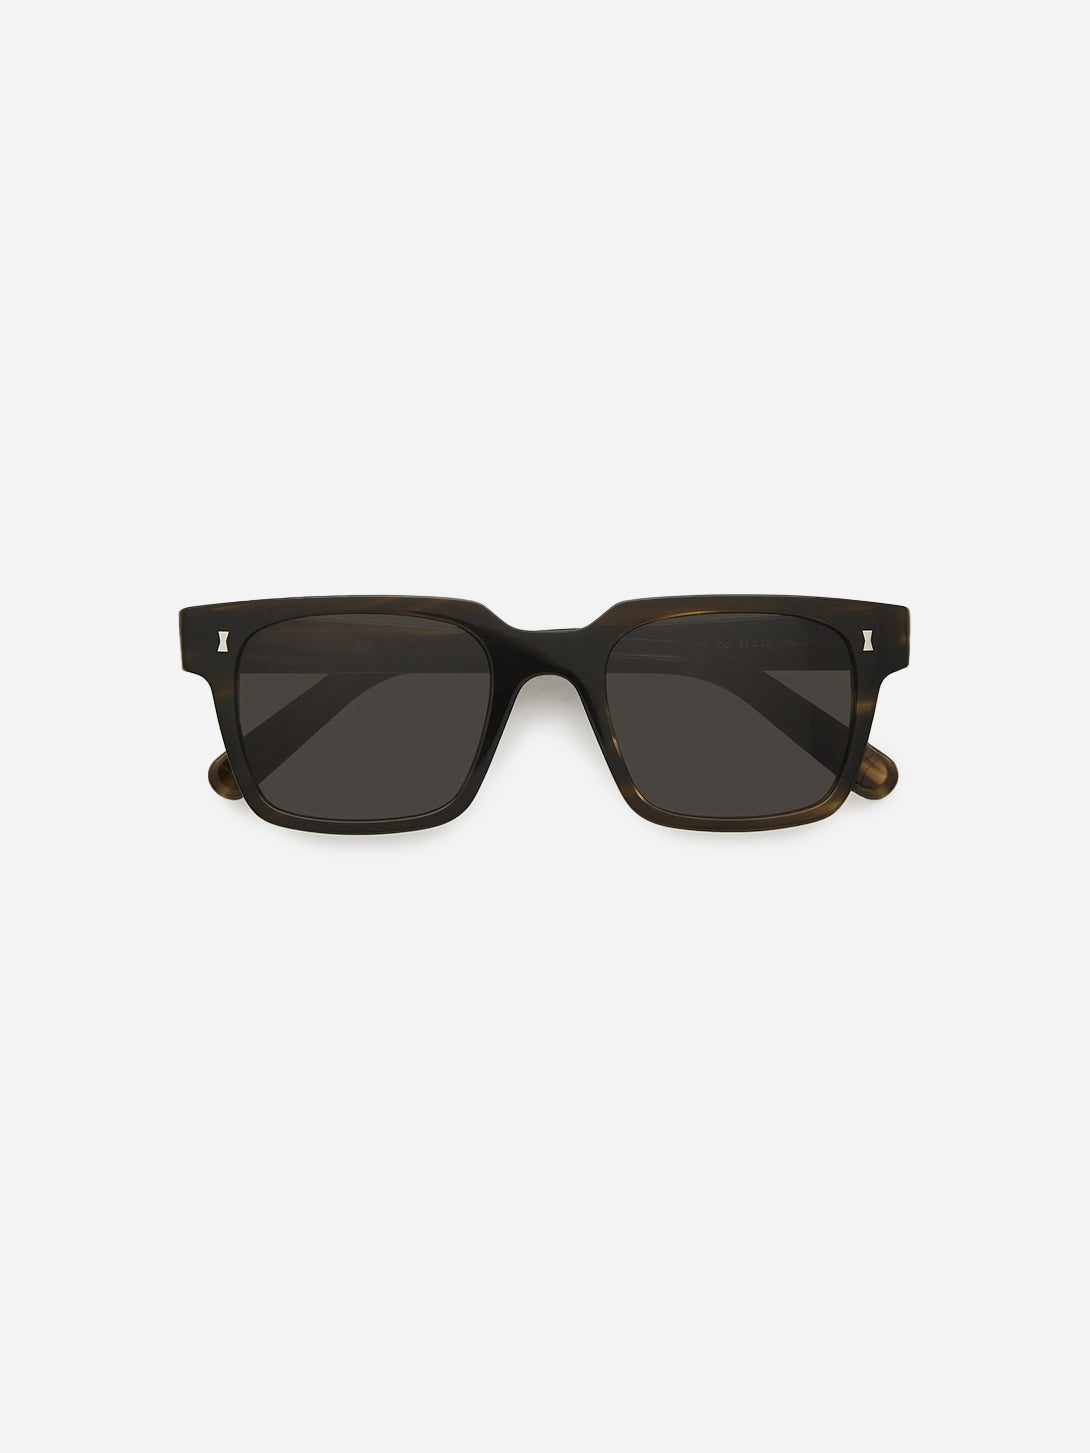 Olive Panton Cubitts Sunglasses